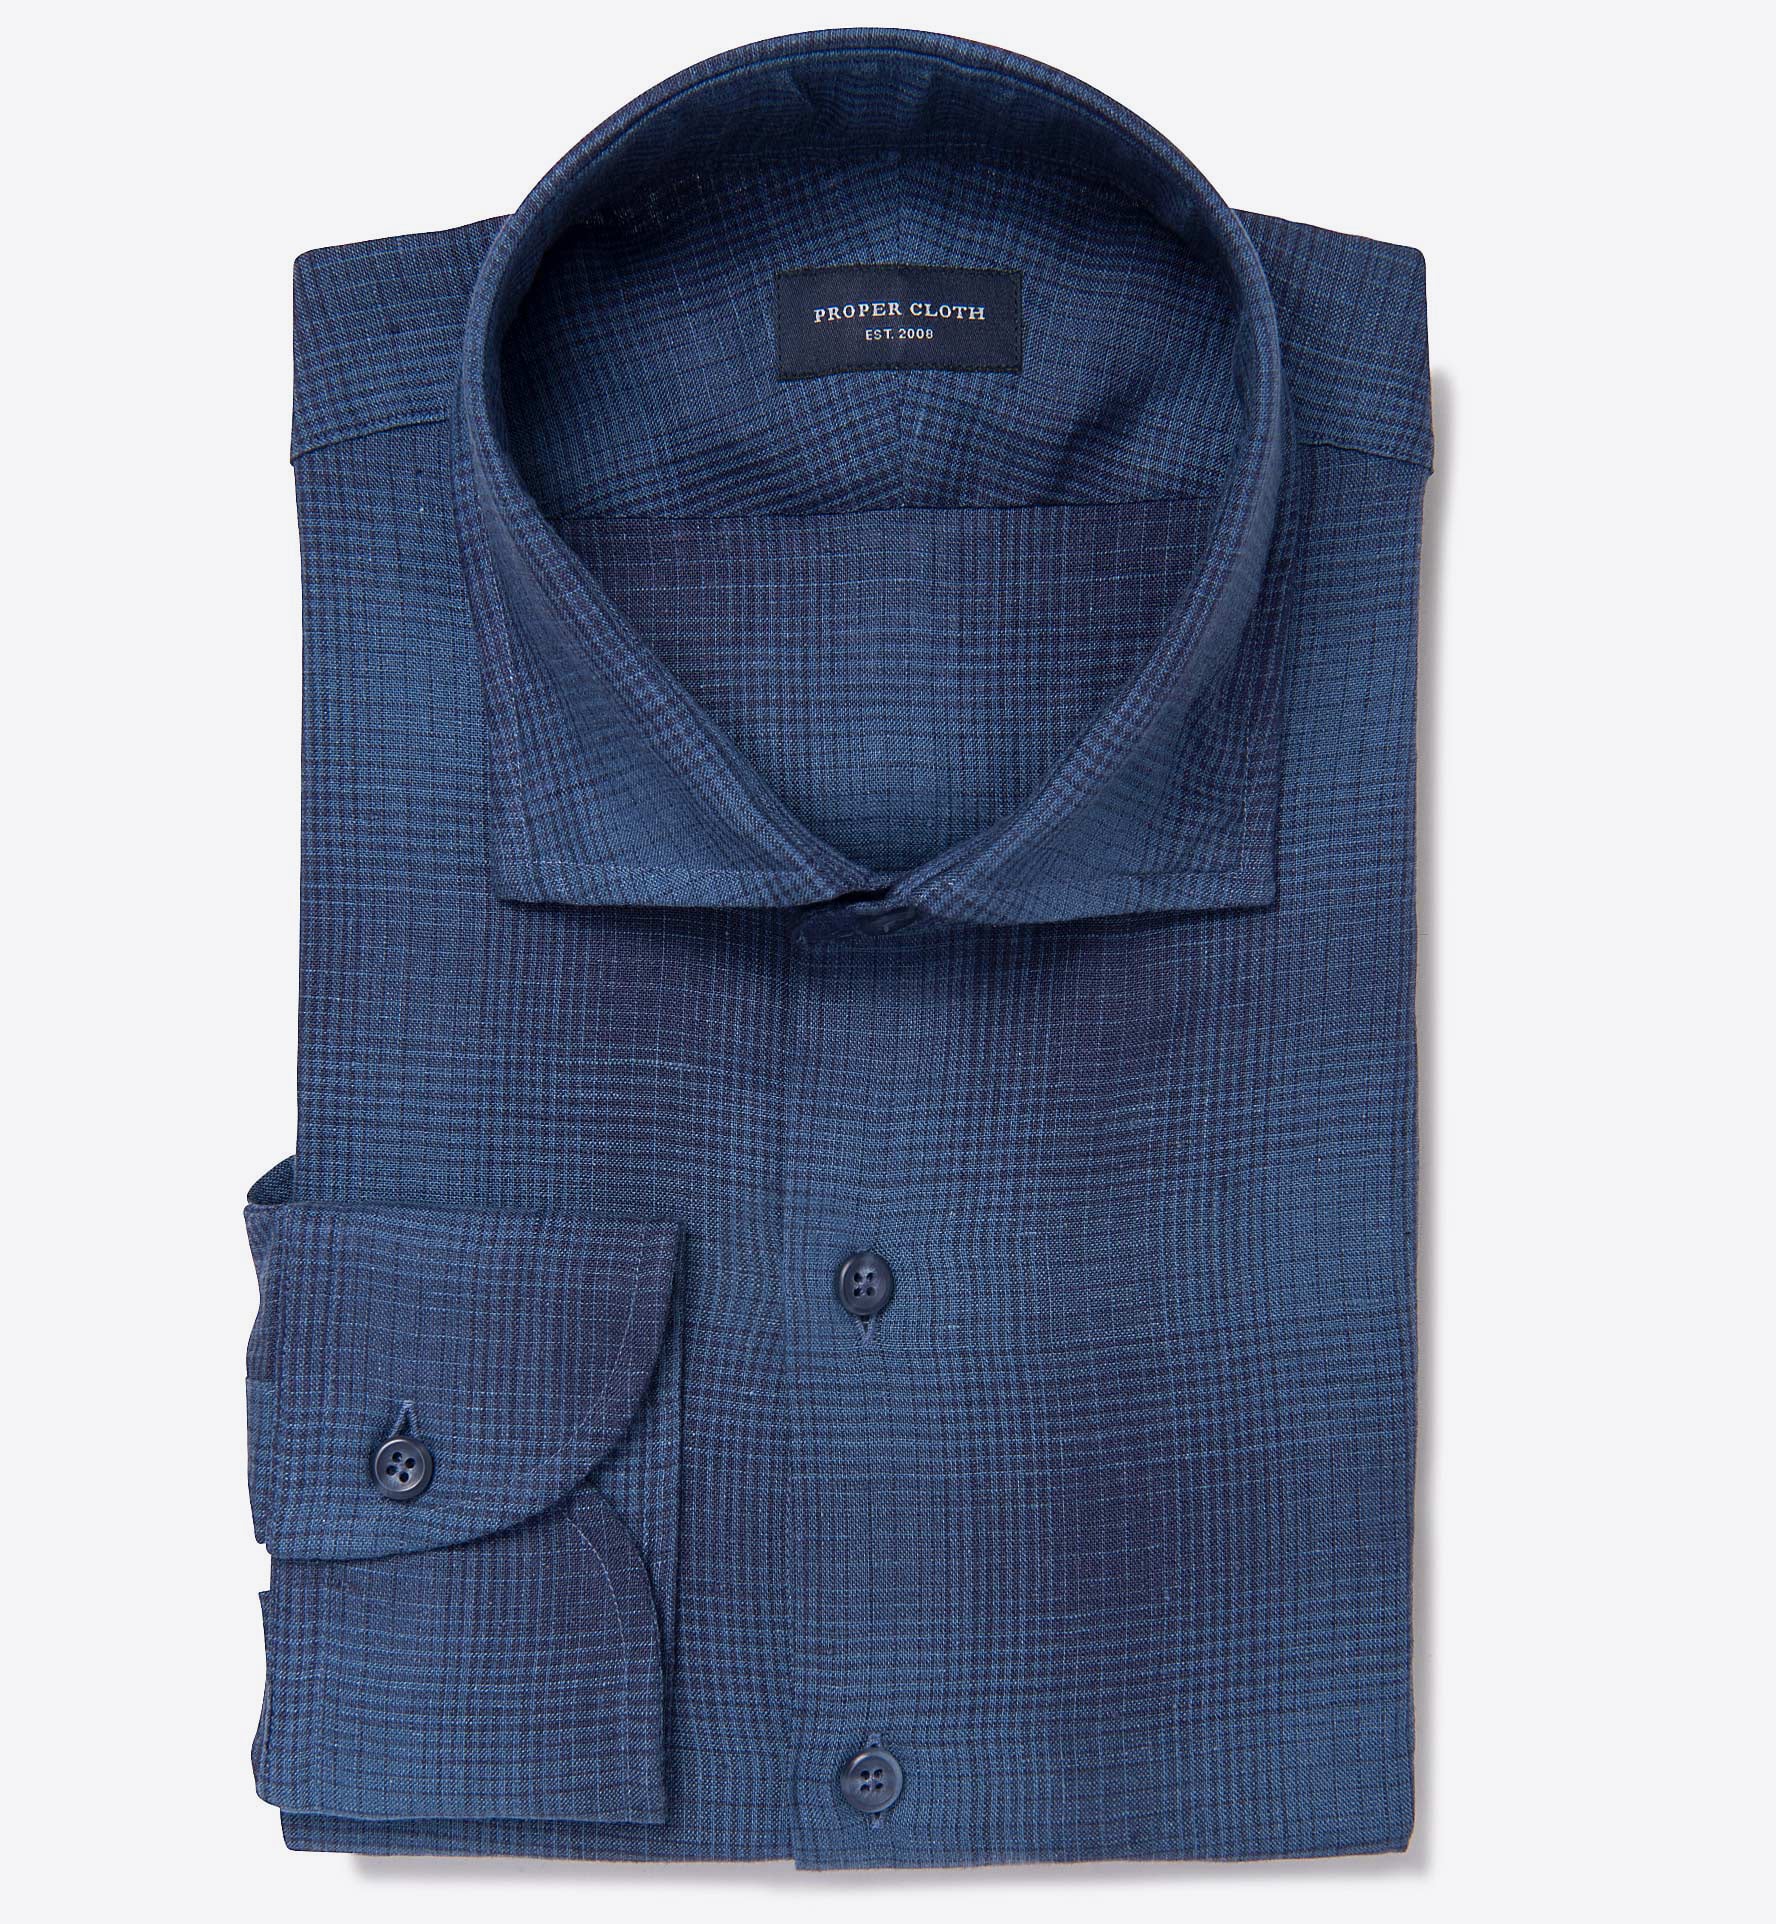 Porto Ocean Blue Ombre Plaid Linen Tailor Made Shirt by Proper Cloth